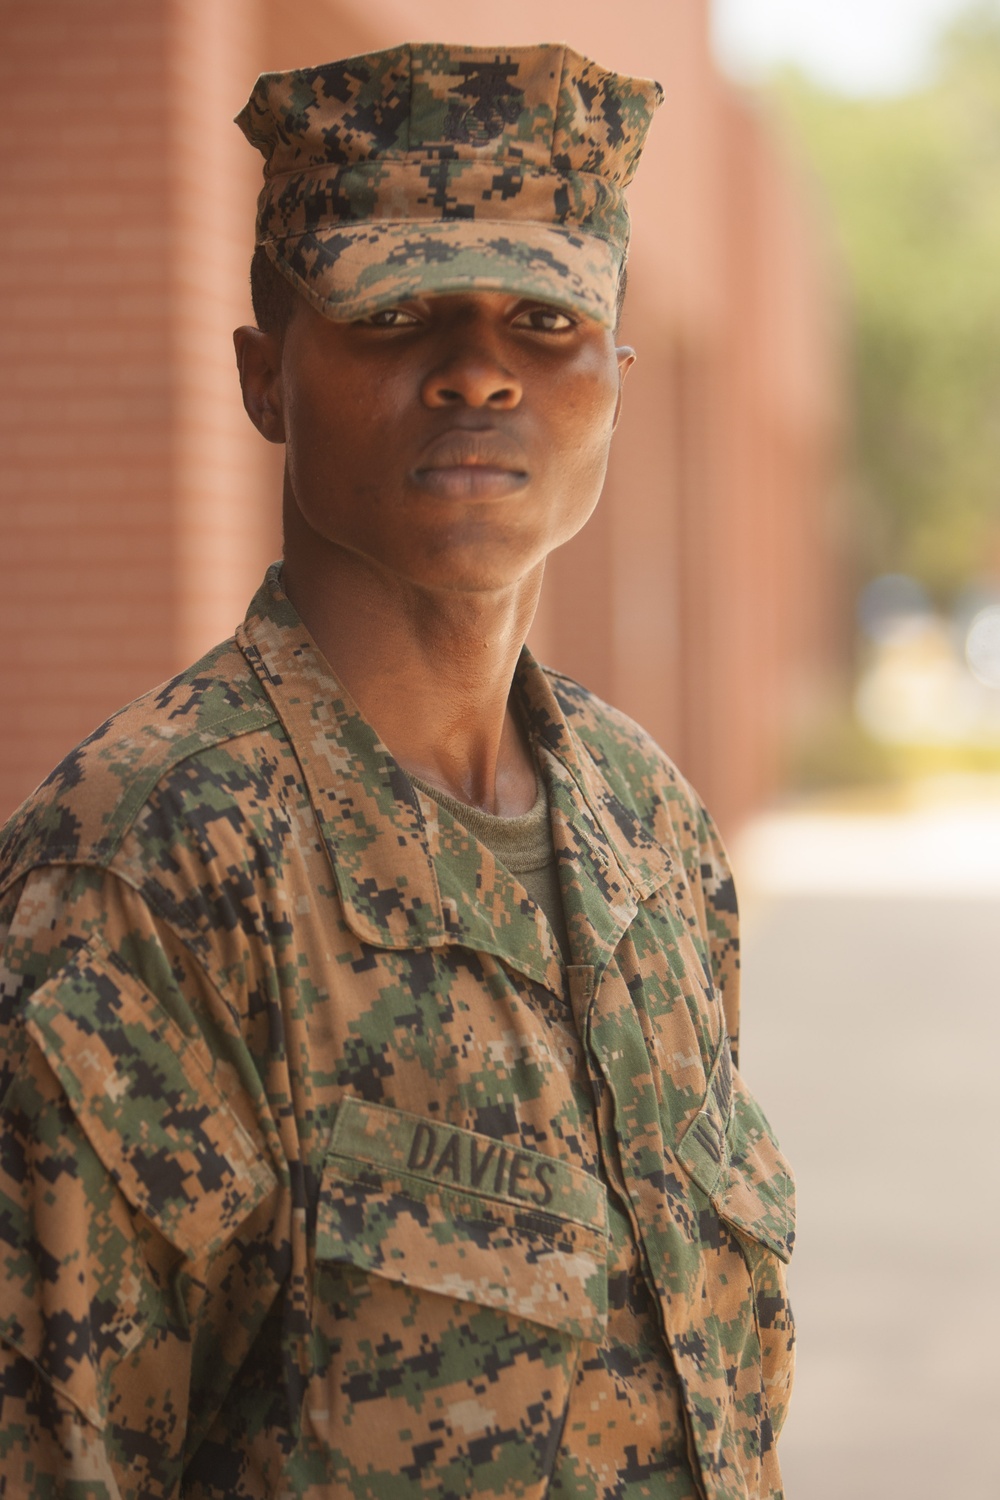 Liberia native, Hamilton, N.J. resident, training at Parris Island to become U.S. Marine